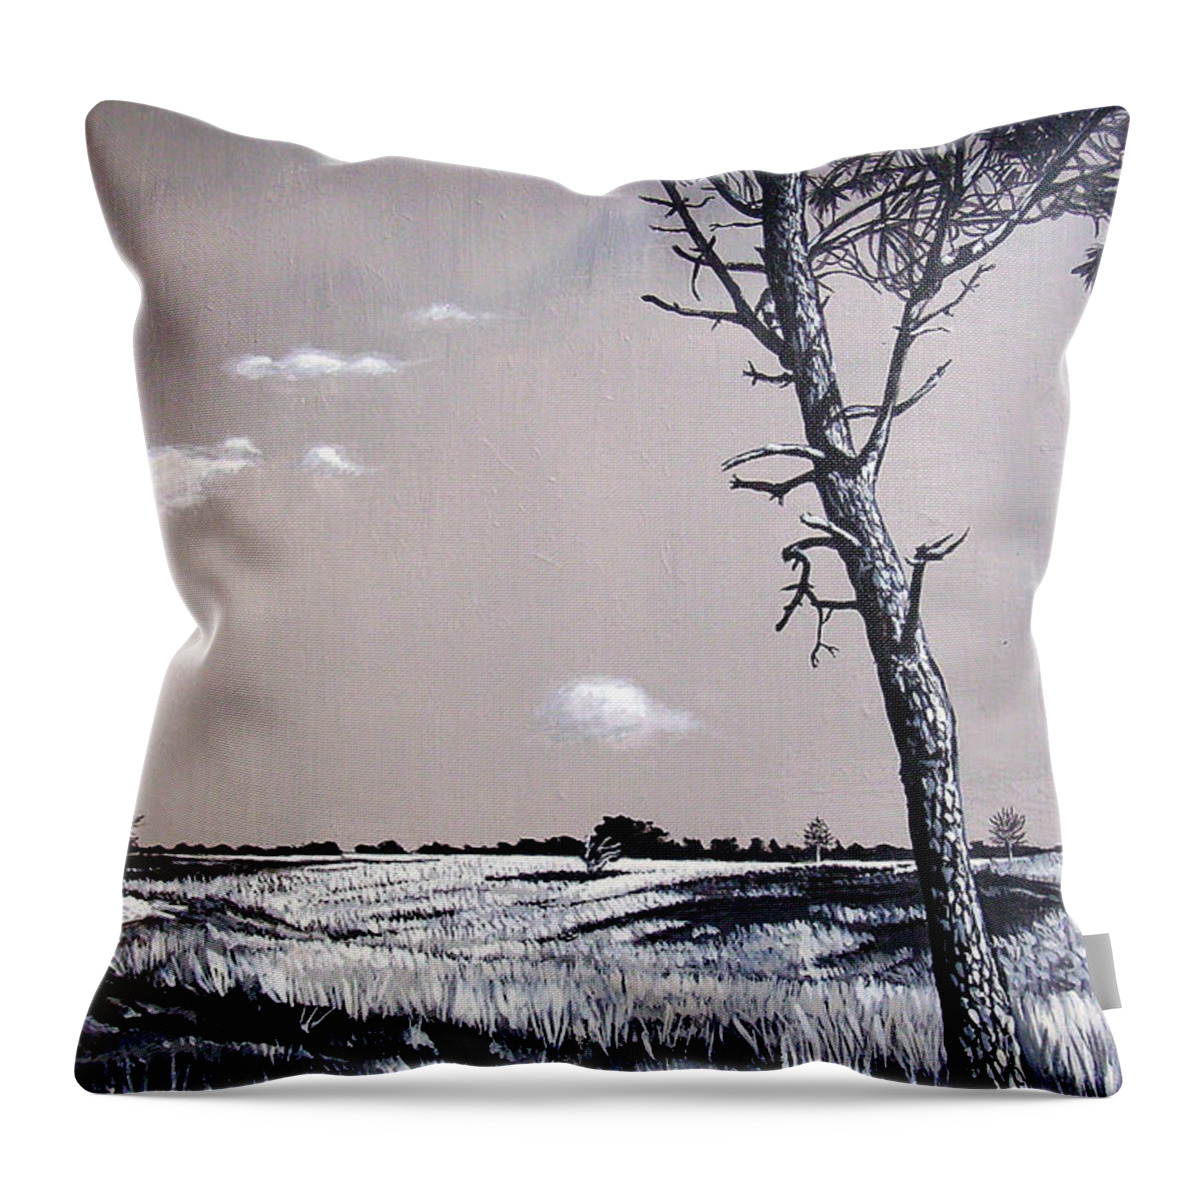 Duotone Throw Pillow featuring the painting Dutch Heathland by Arie Van der Wijst